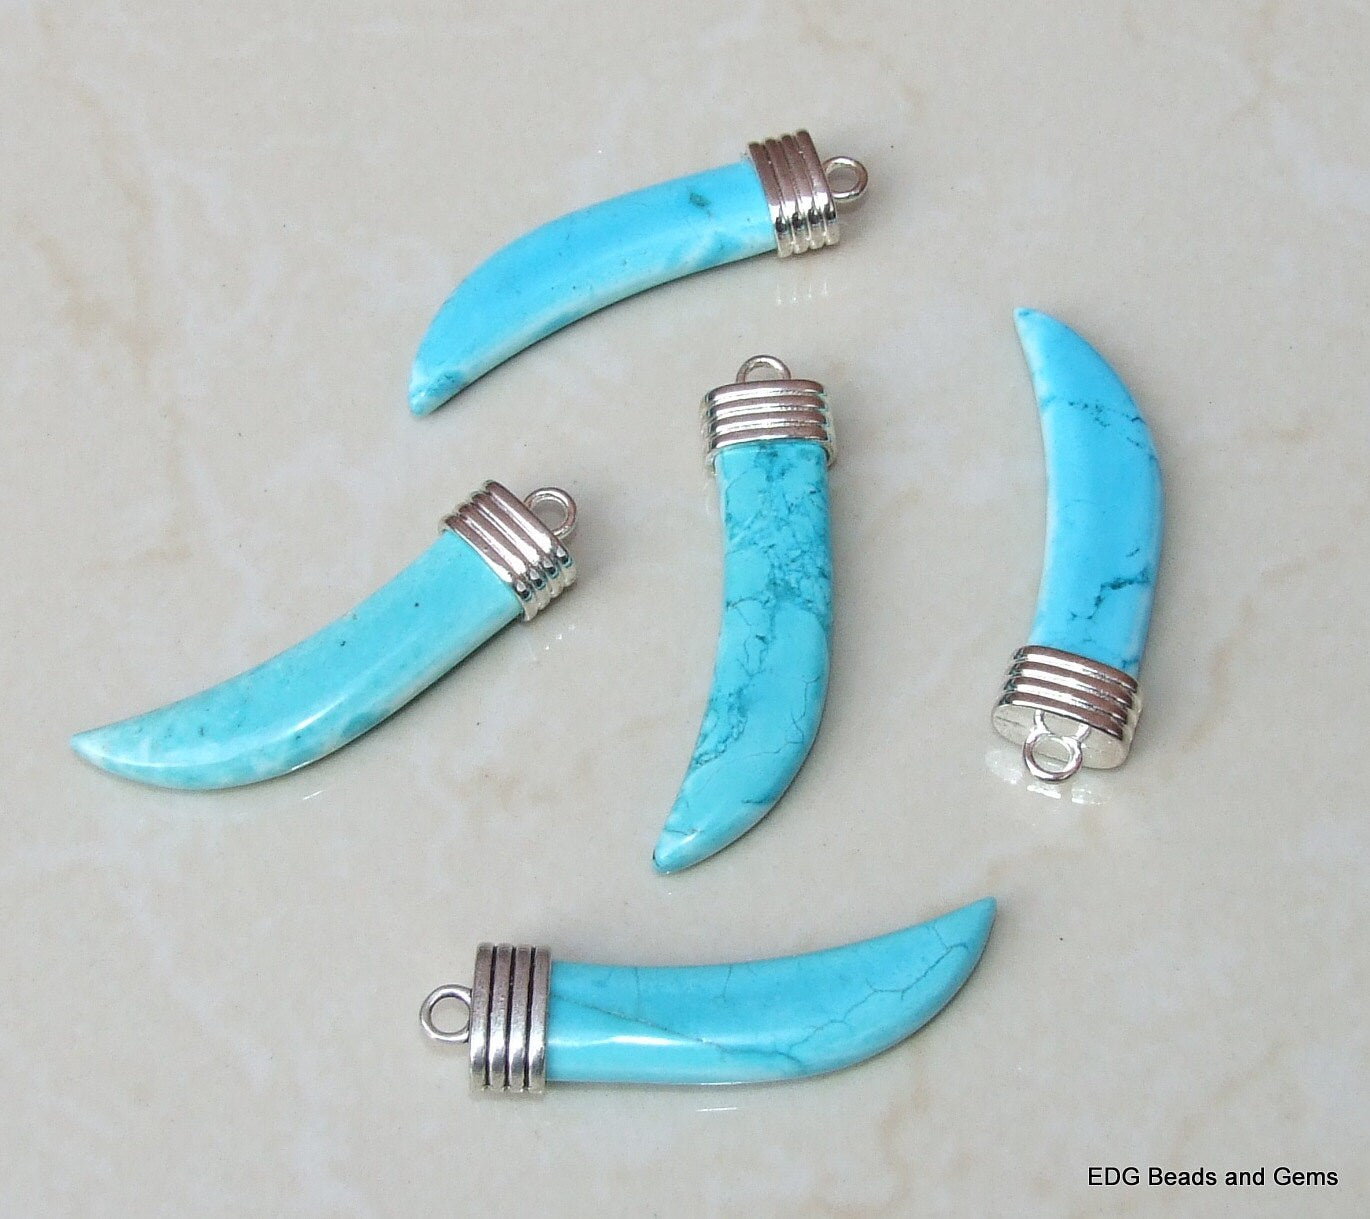 Turquoise Blue Howlite Tusk Pendant - Horn Tusk Spike Pendant - 10mm x 15mm x 55mm - Silver Cap